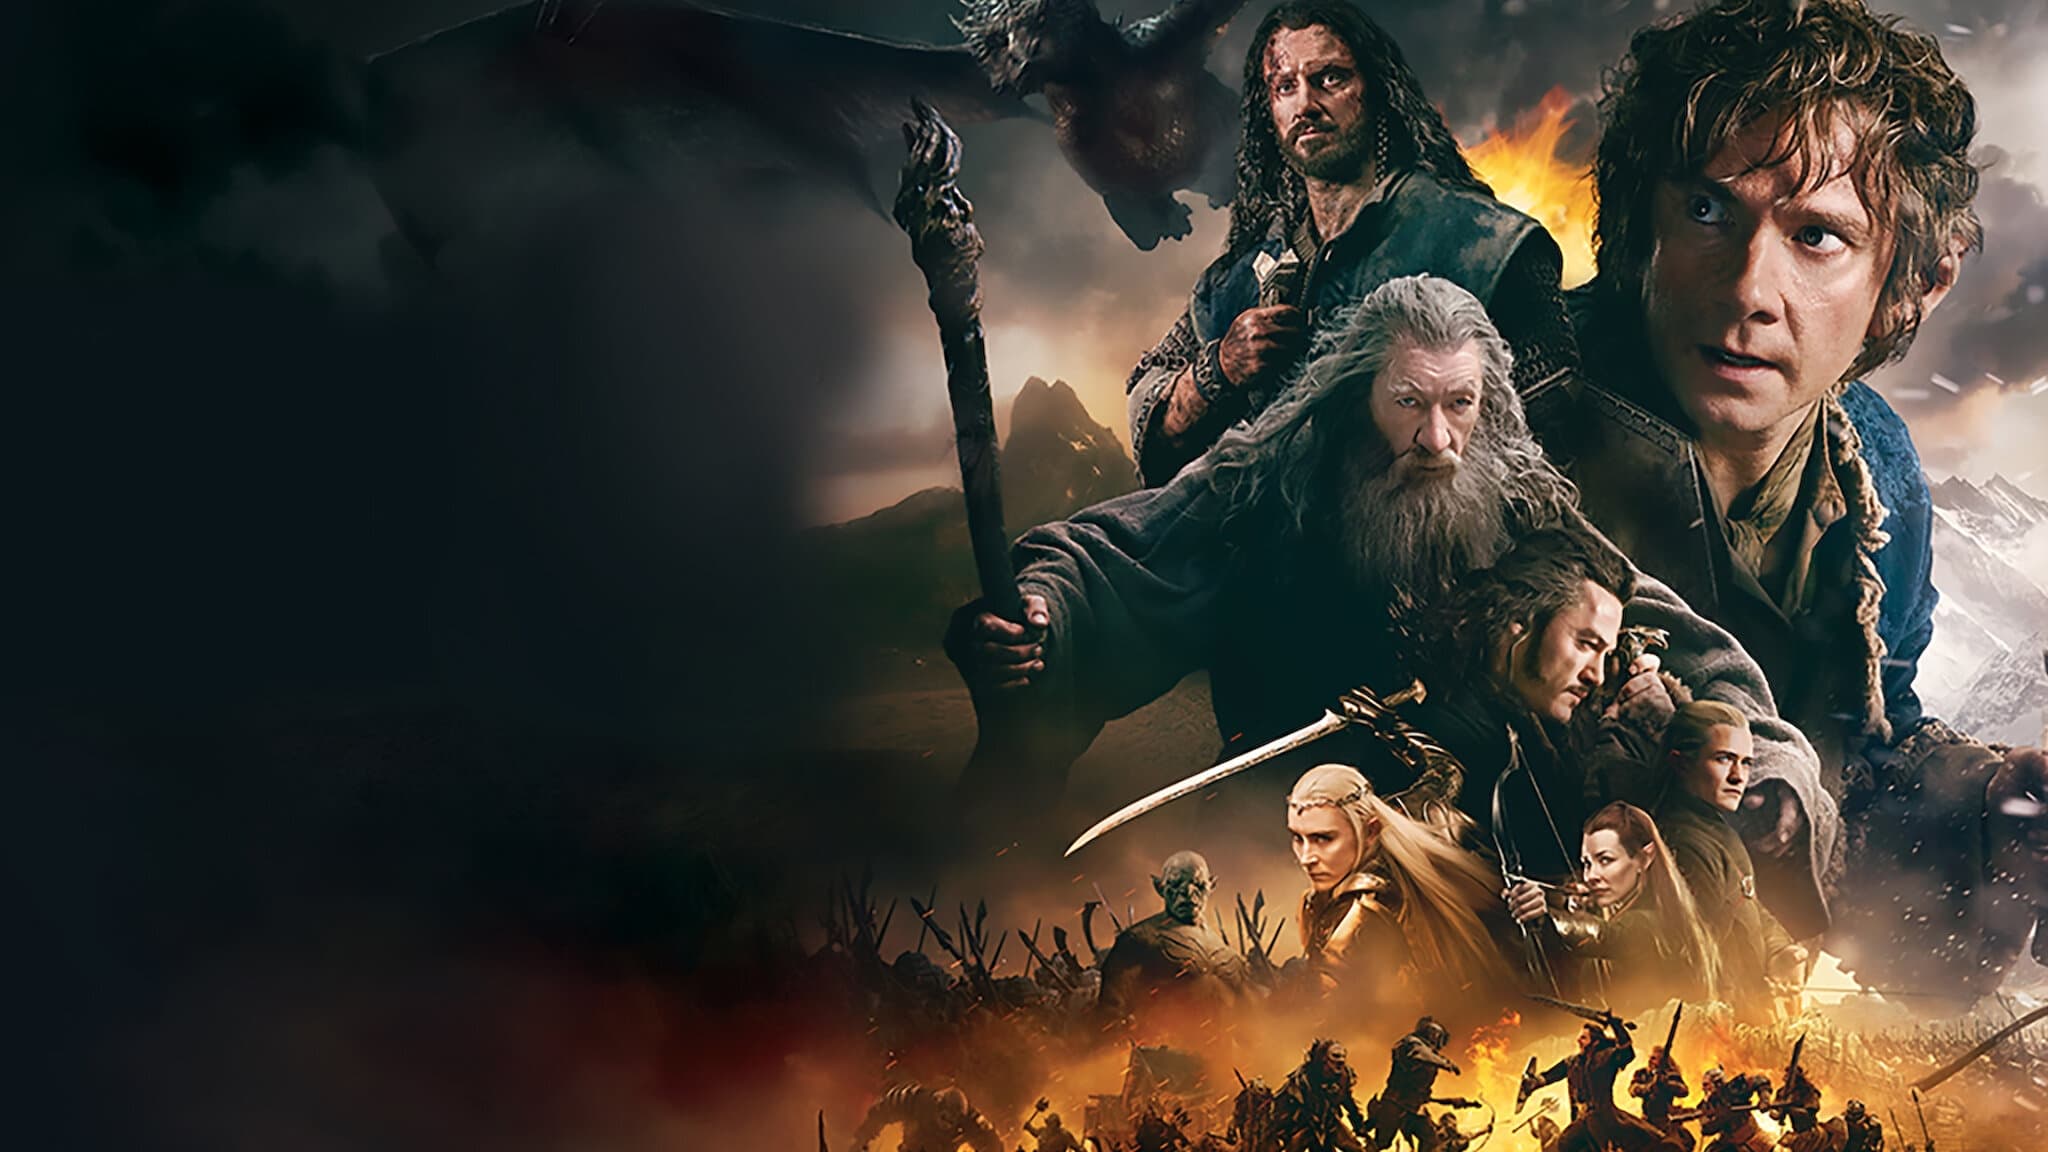 Image du film Le Hobbit : la bataille des cinq armées (version longue) 4ejzujiuoj0ifjhfkrs8ricfudqjpg